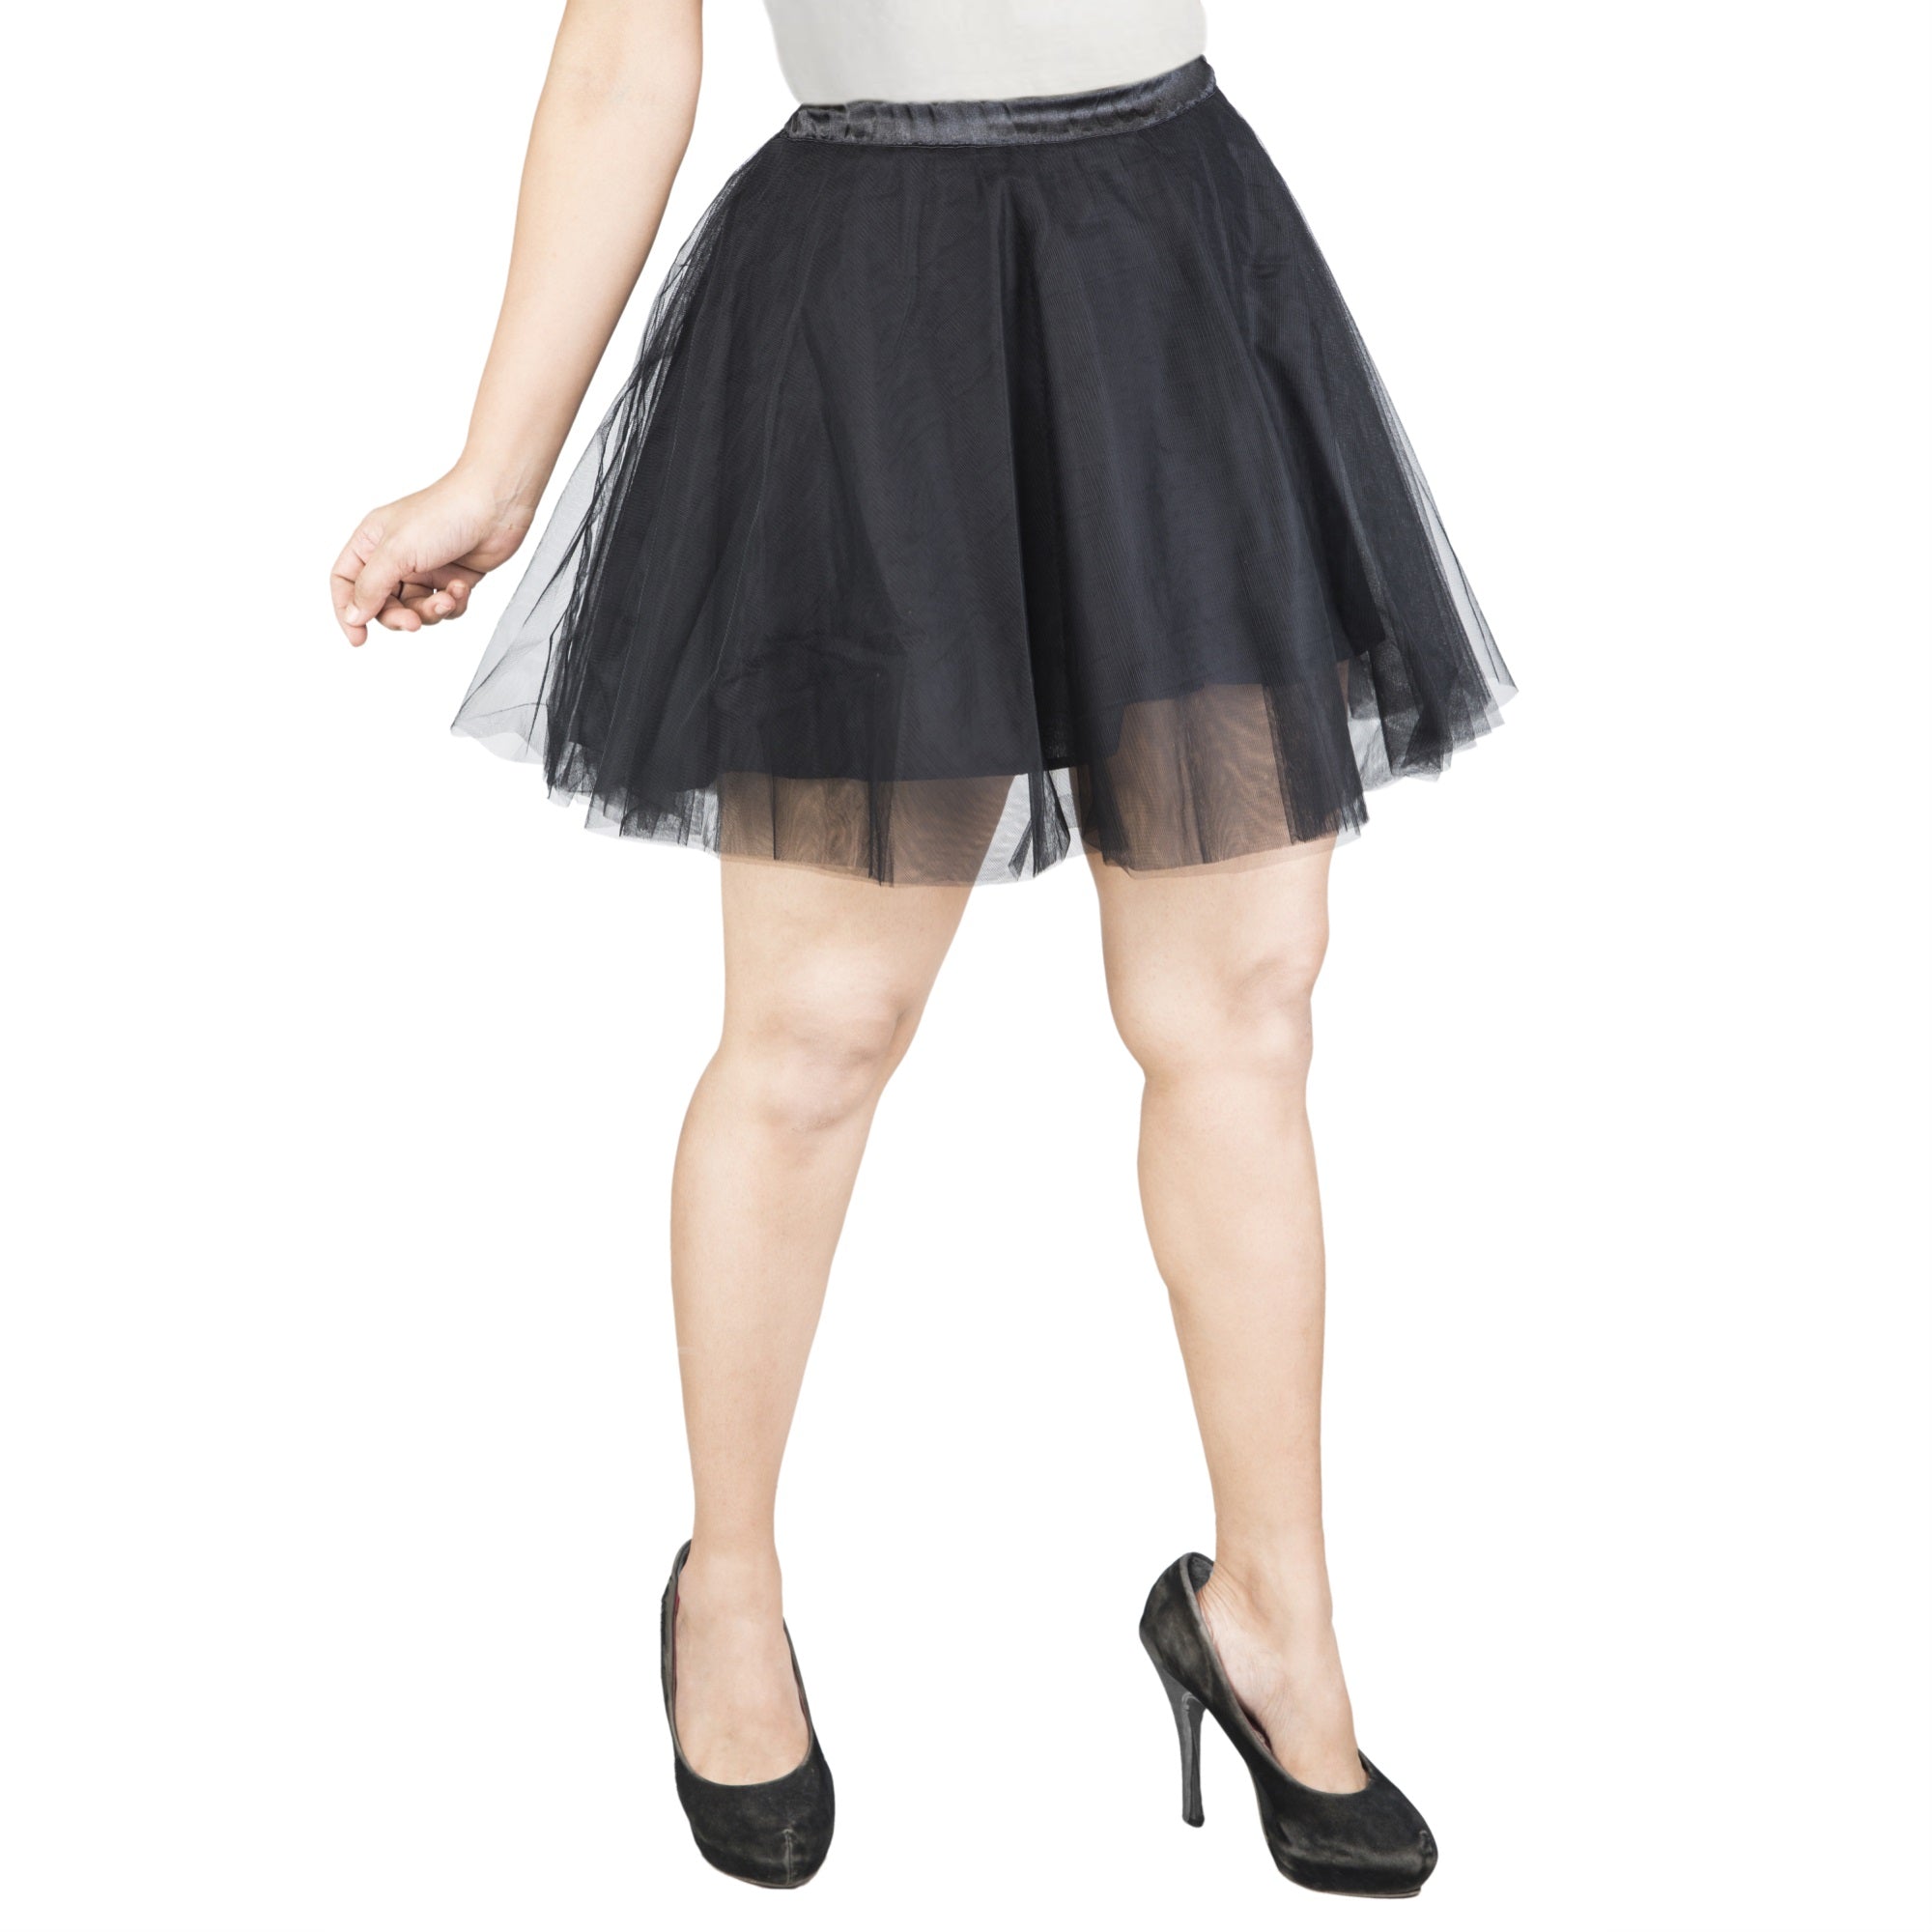 Skirts Women's Halloween Costume Mini Tulle Skirt-Festive Look Crinoline-Black malcomodes-biz.myshopify.com